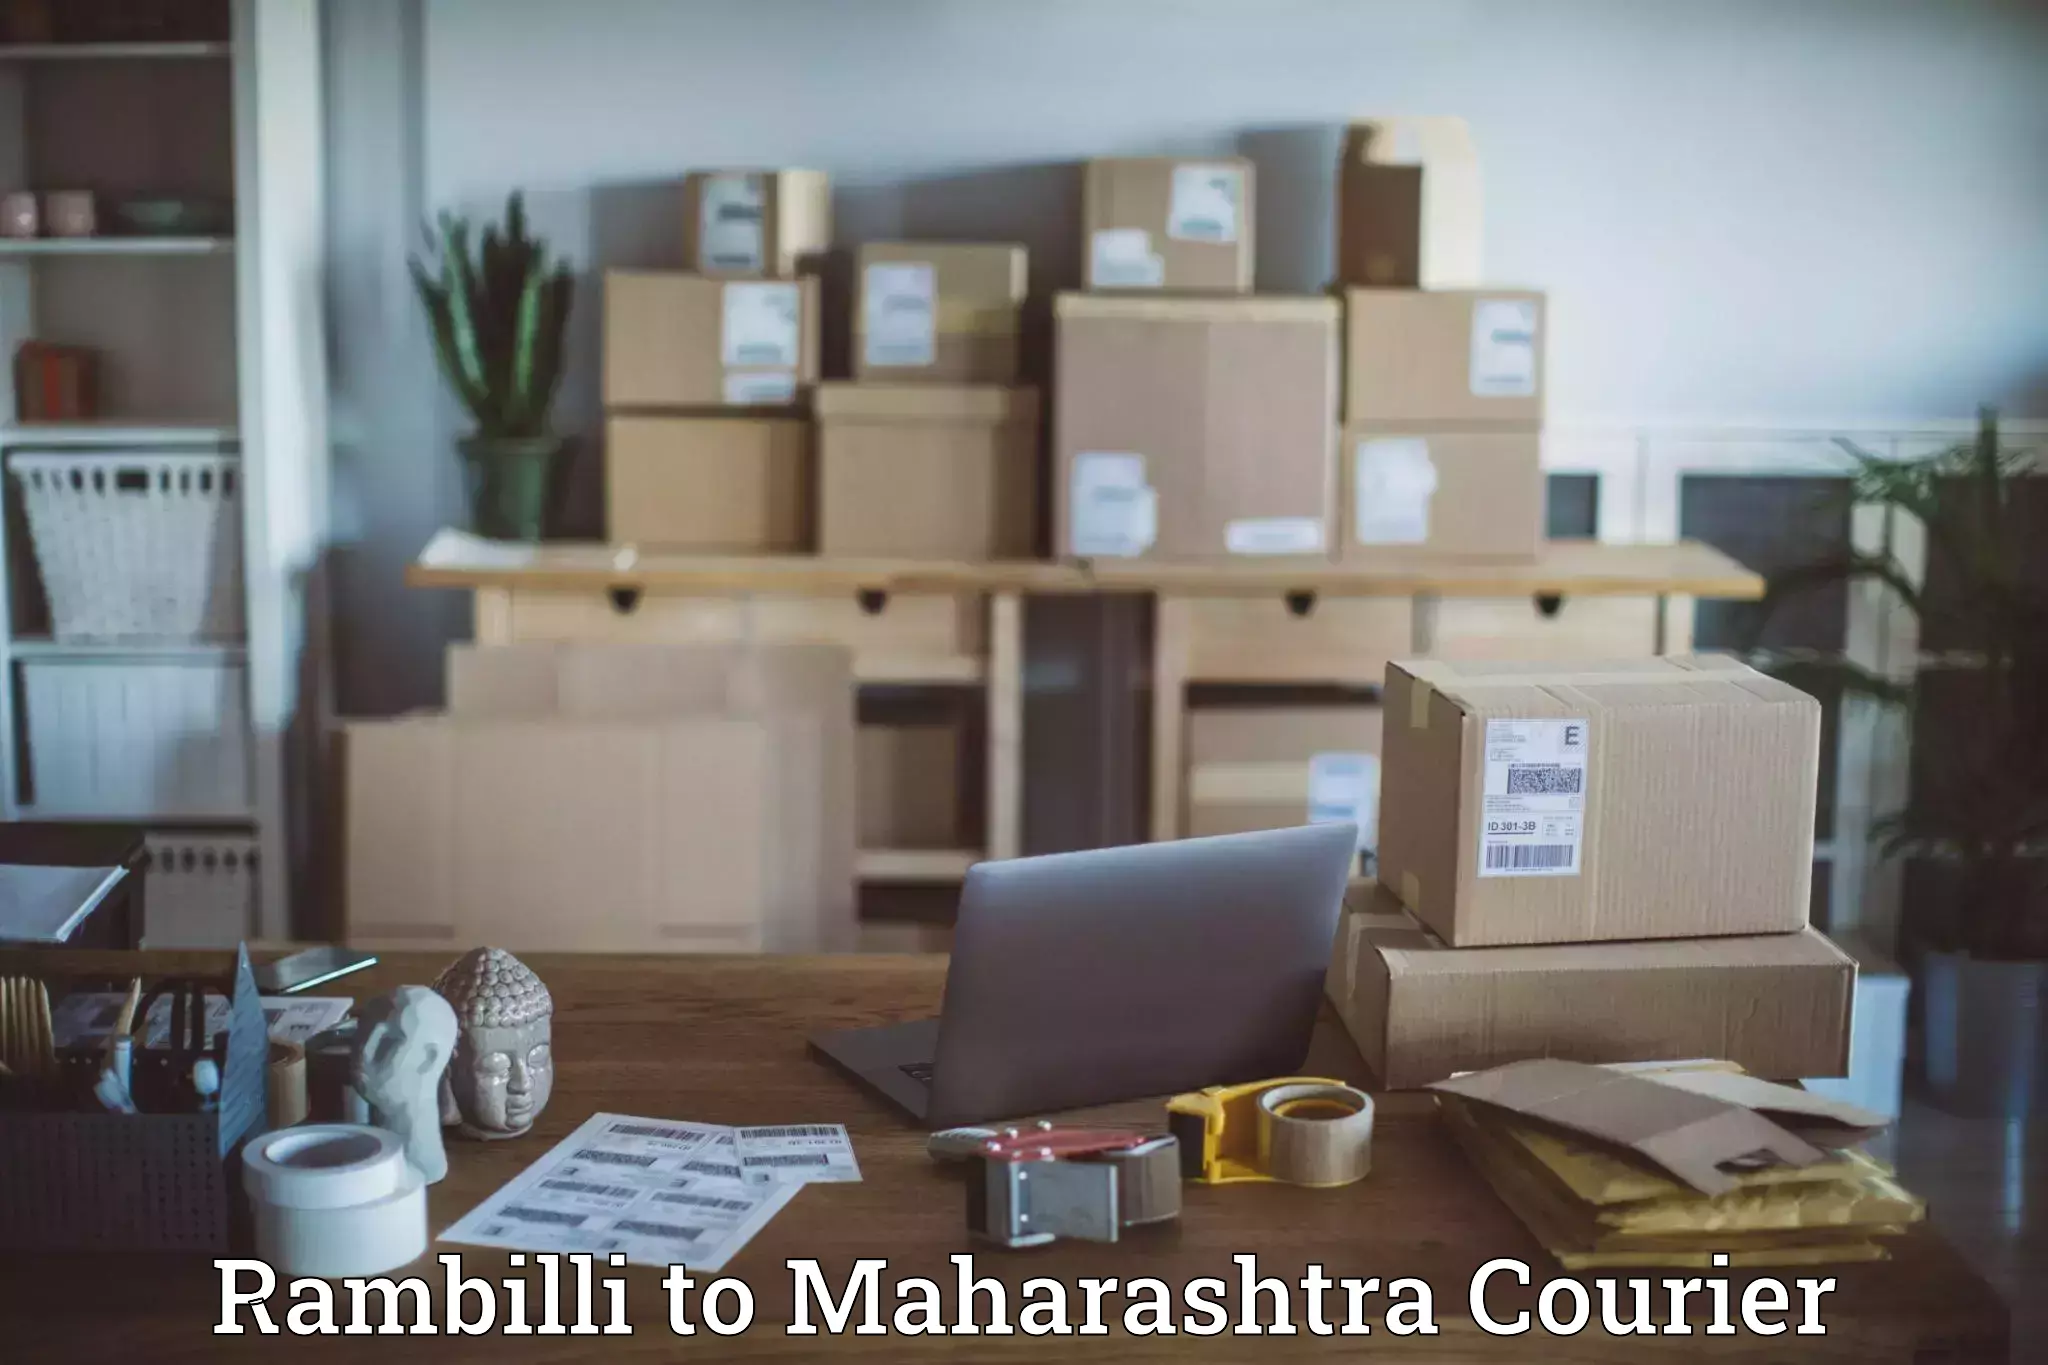 Logistics service provider Rambilli to Mumbai Port